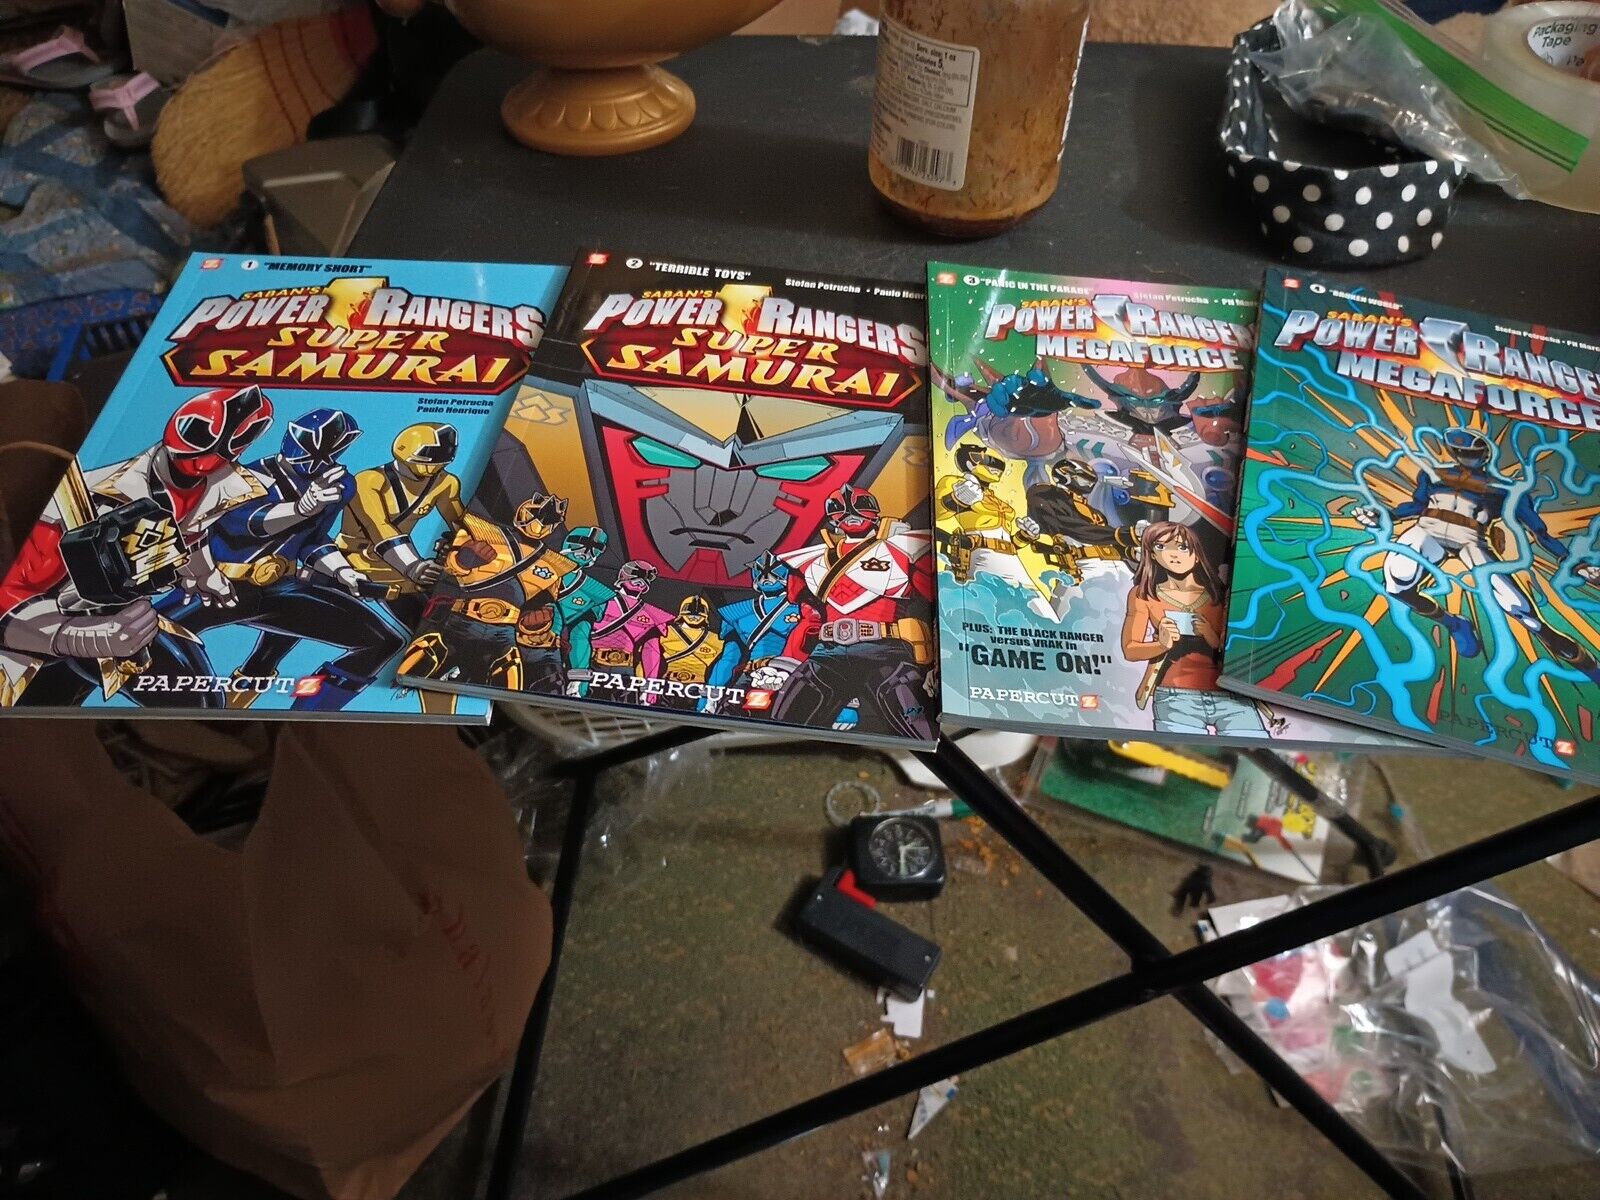 Saban's Power Rangers set of four graphic novels